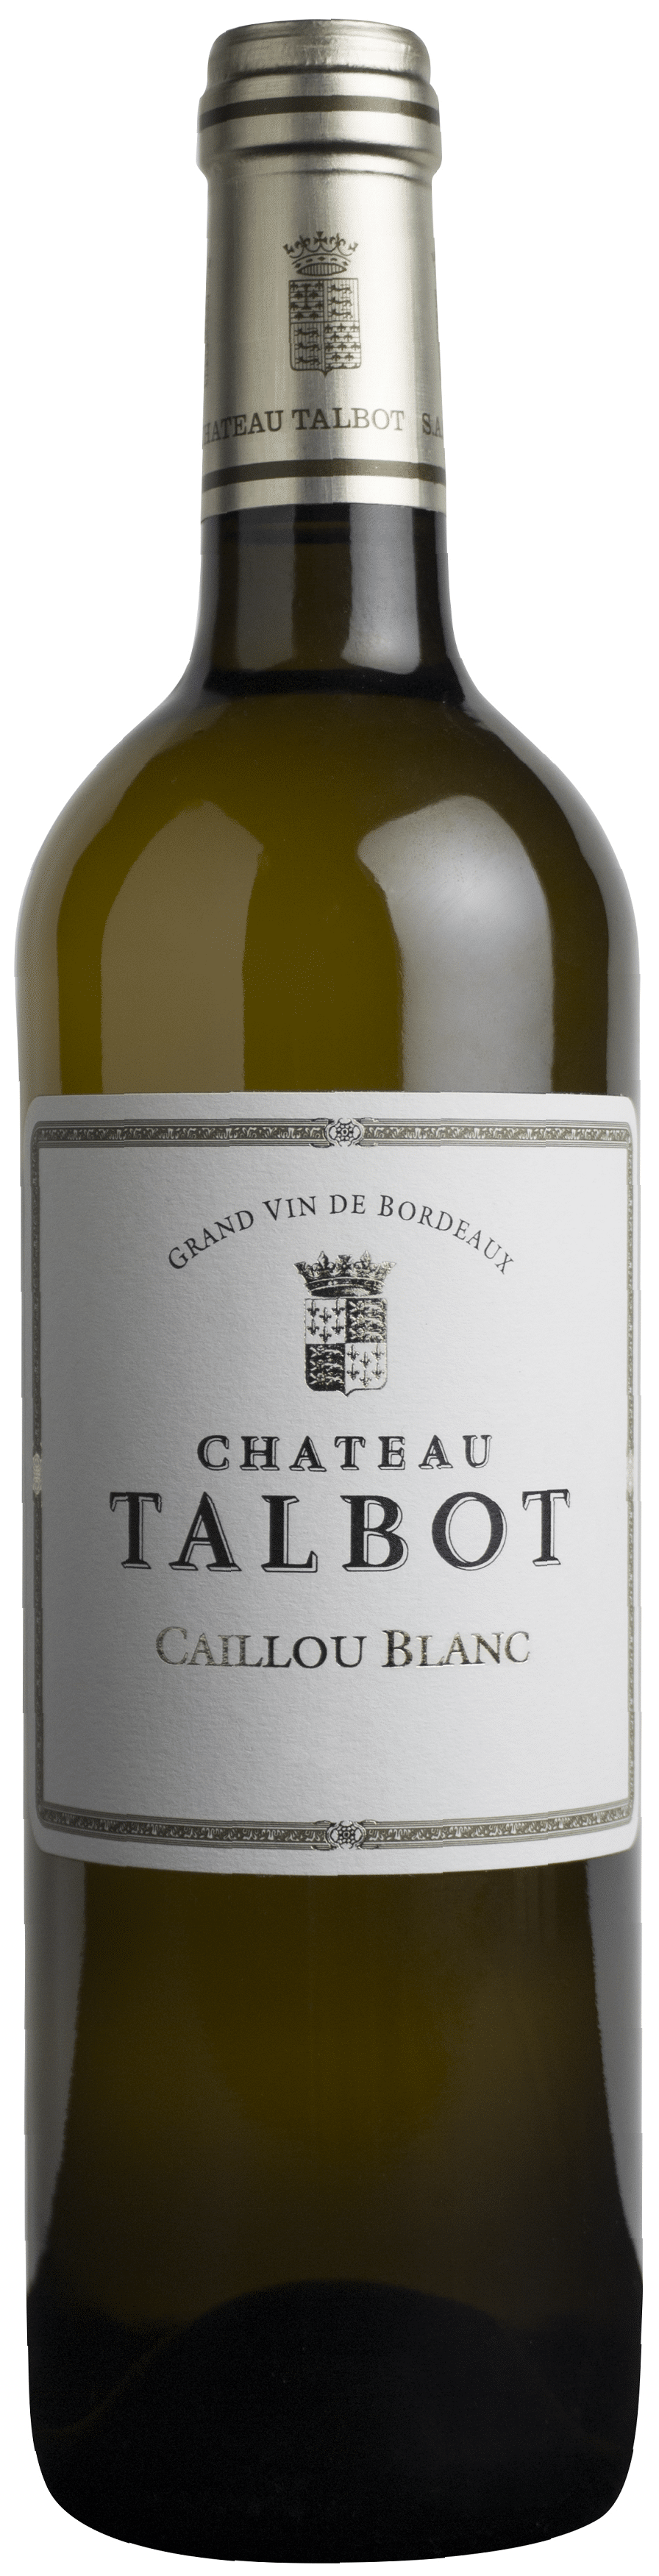 Chateau Talbot, Caillou Blanc, 2015